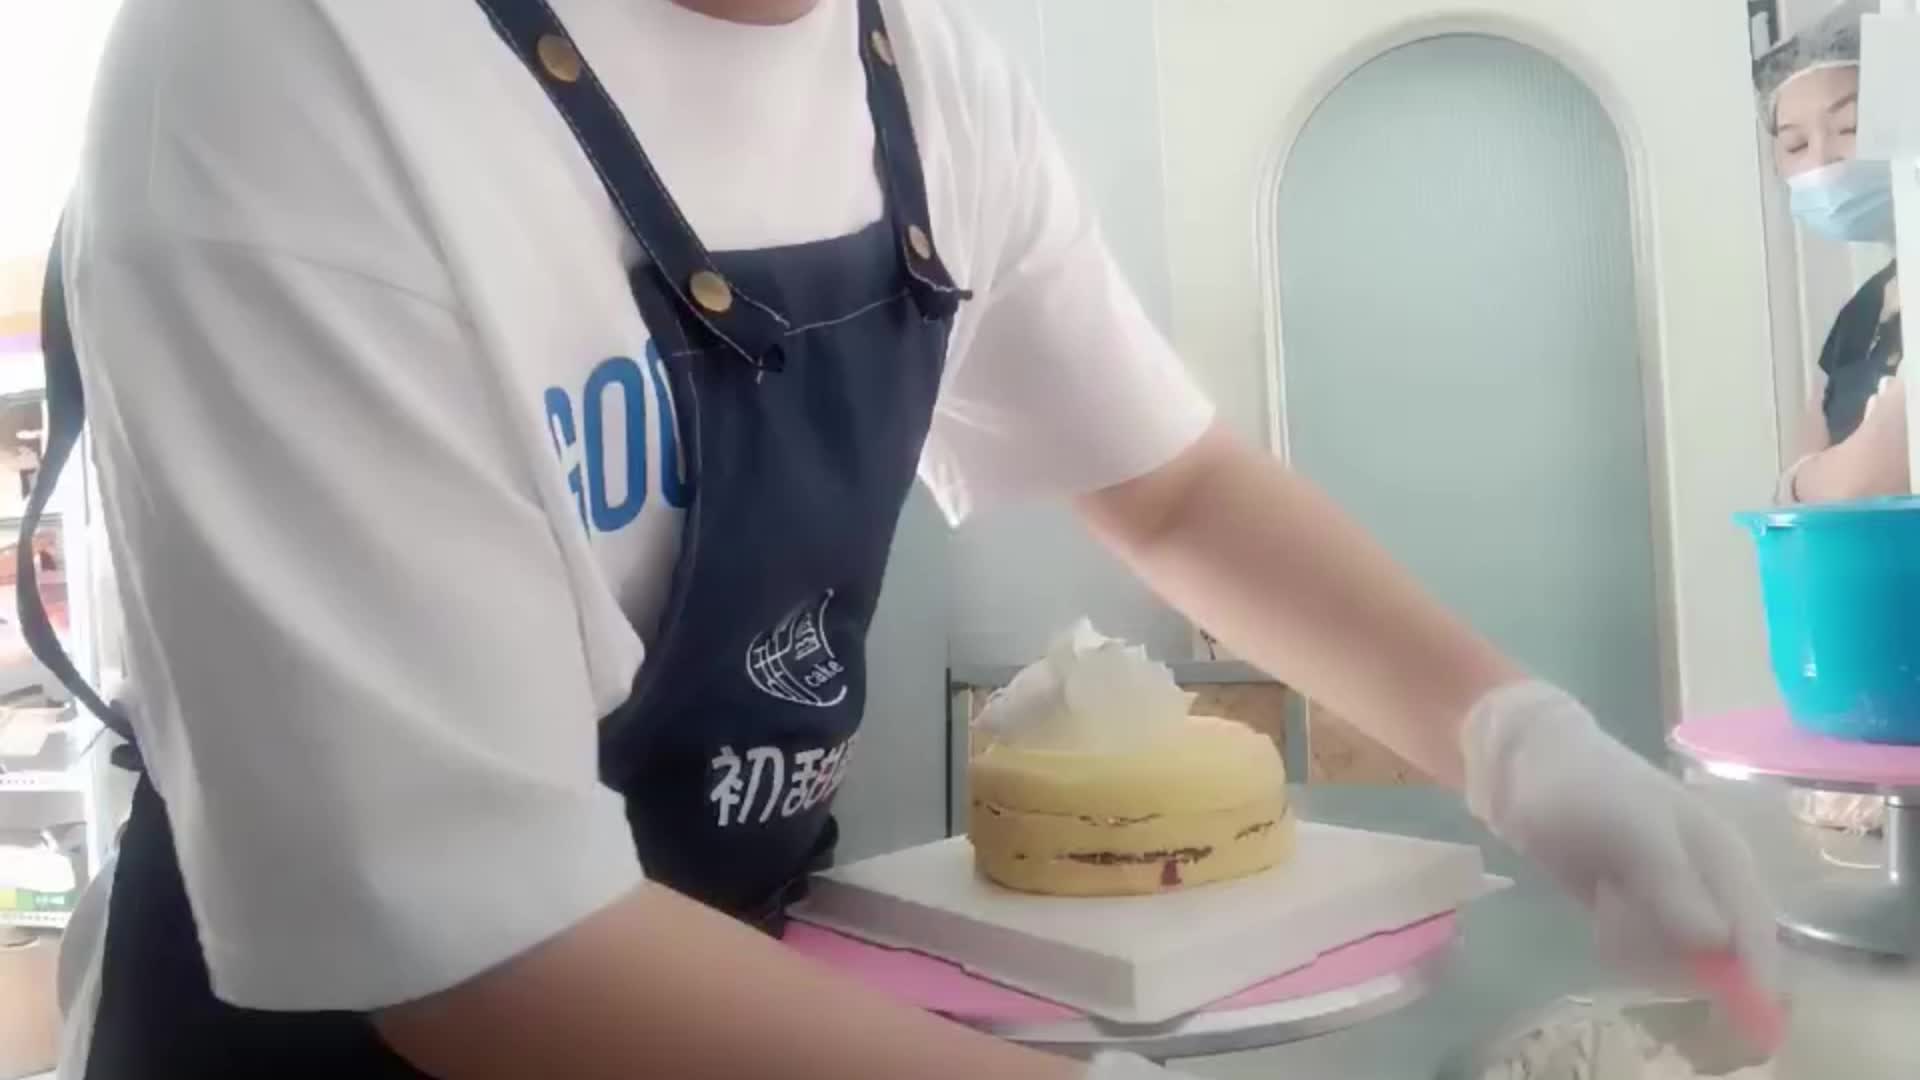 【Benny cake】白雪公主蛋糕 | The Snow White Cake_哔哩哔哩_bilibili